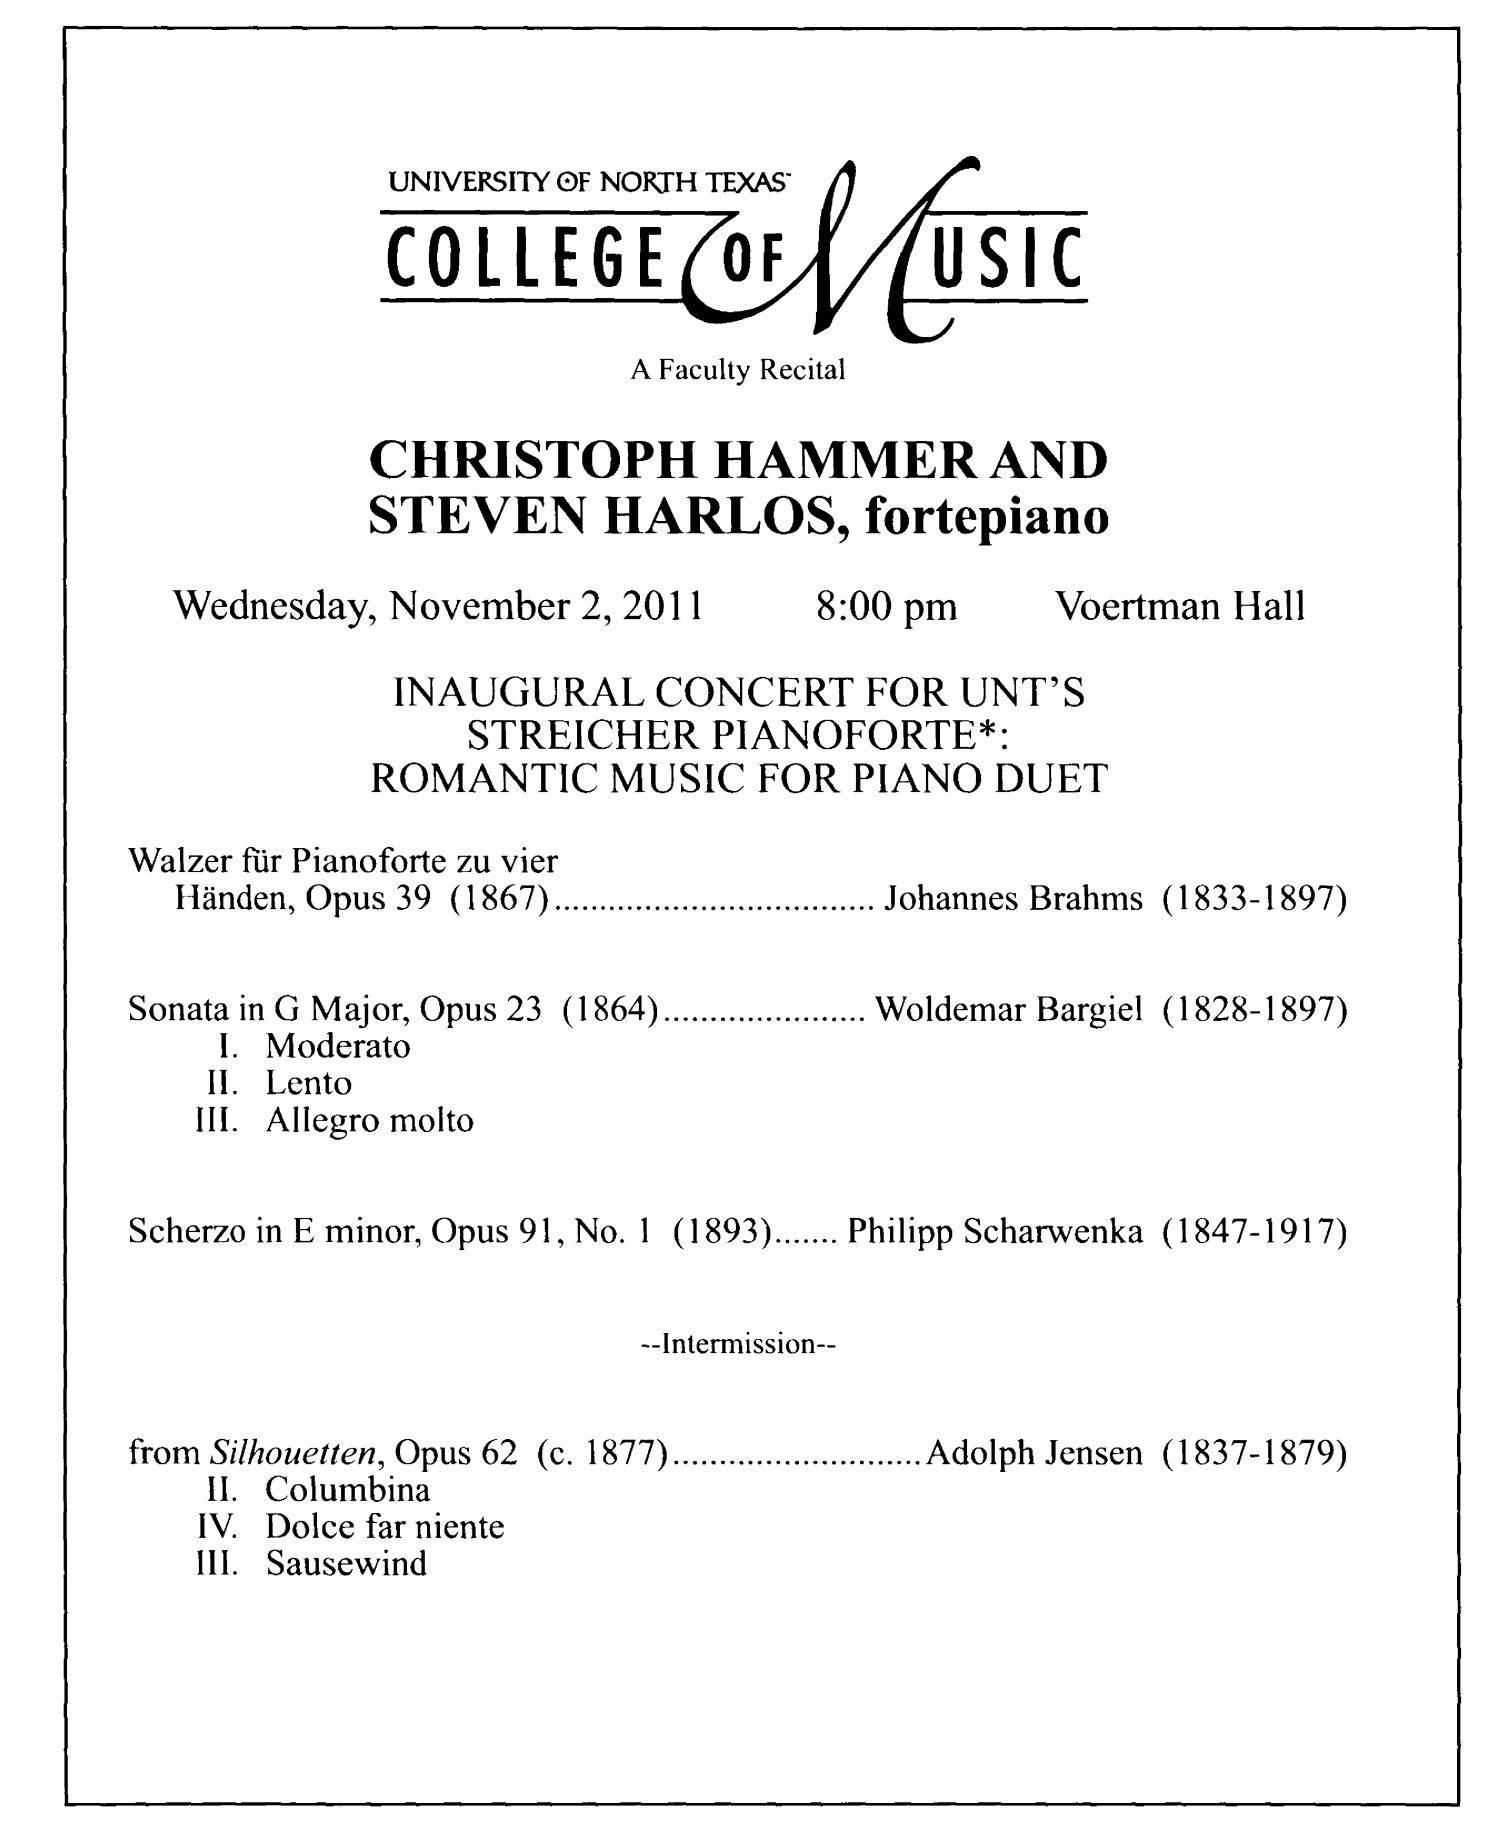 College of Music Program Book 2011-2012: Ensemble & Other Performances, Volume 1
                                                
                                                    407
                                                